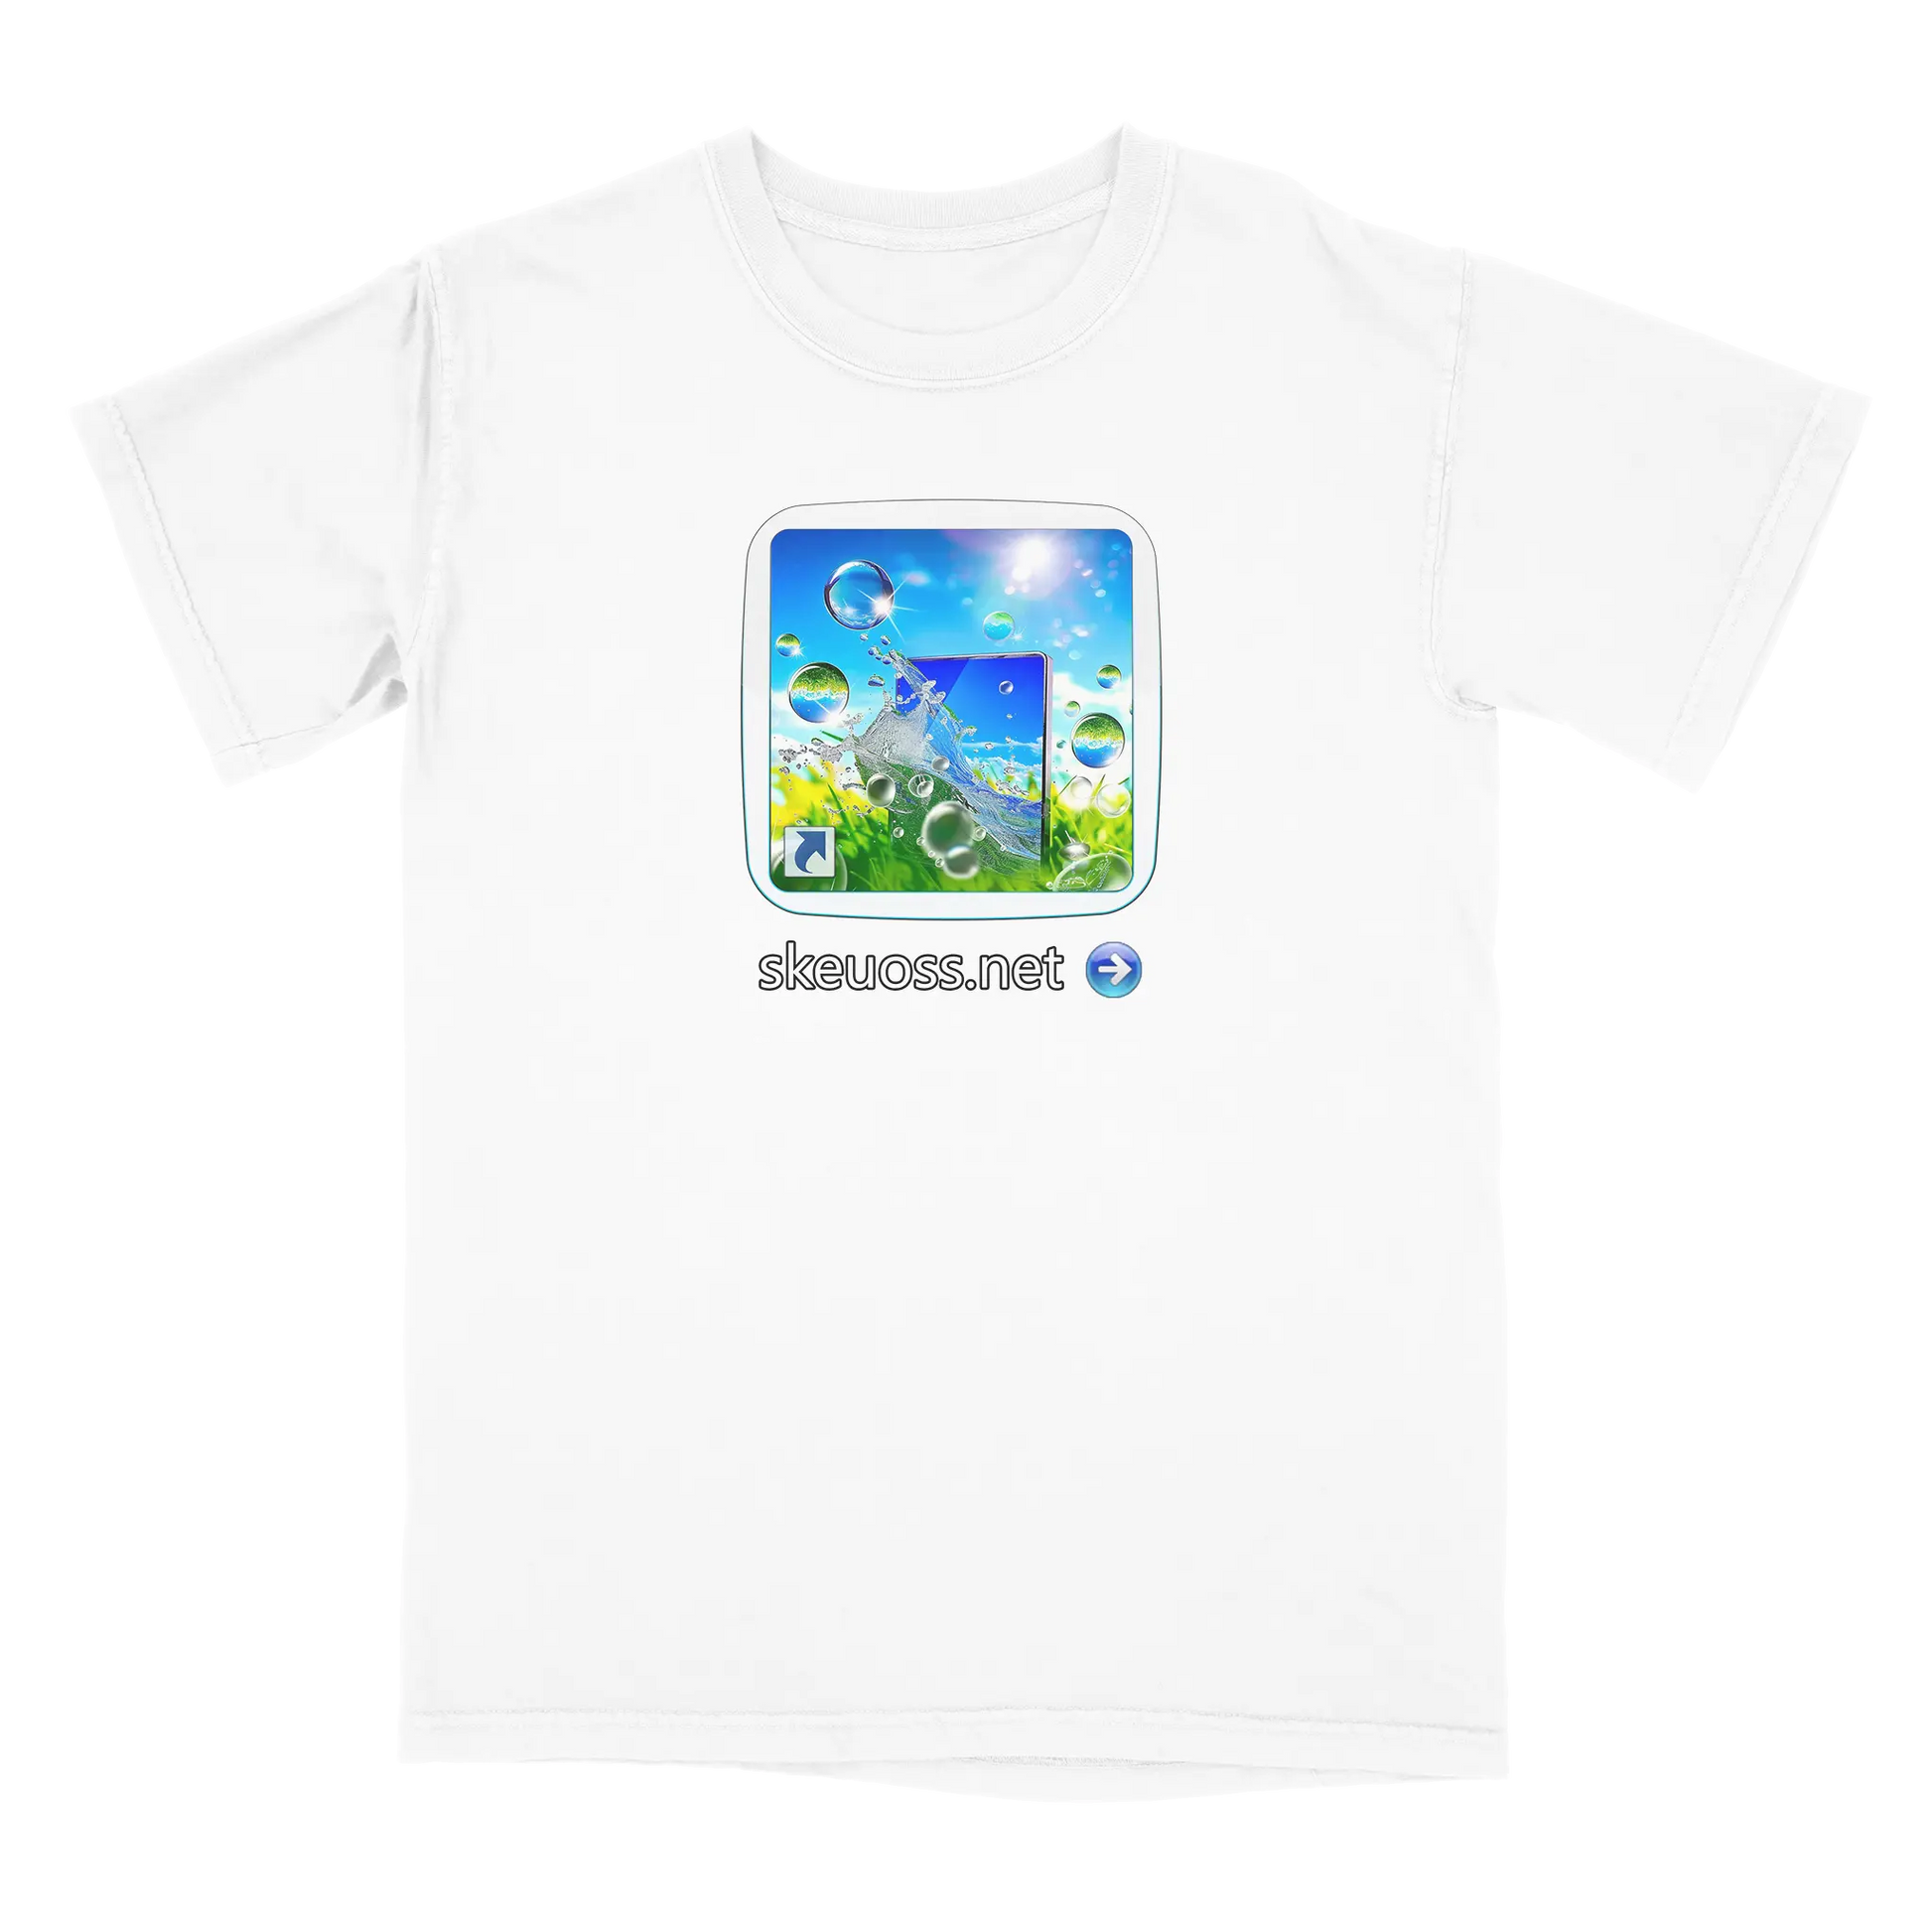 Frutiger Aero T-shirt - User Login Collection - User 272